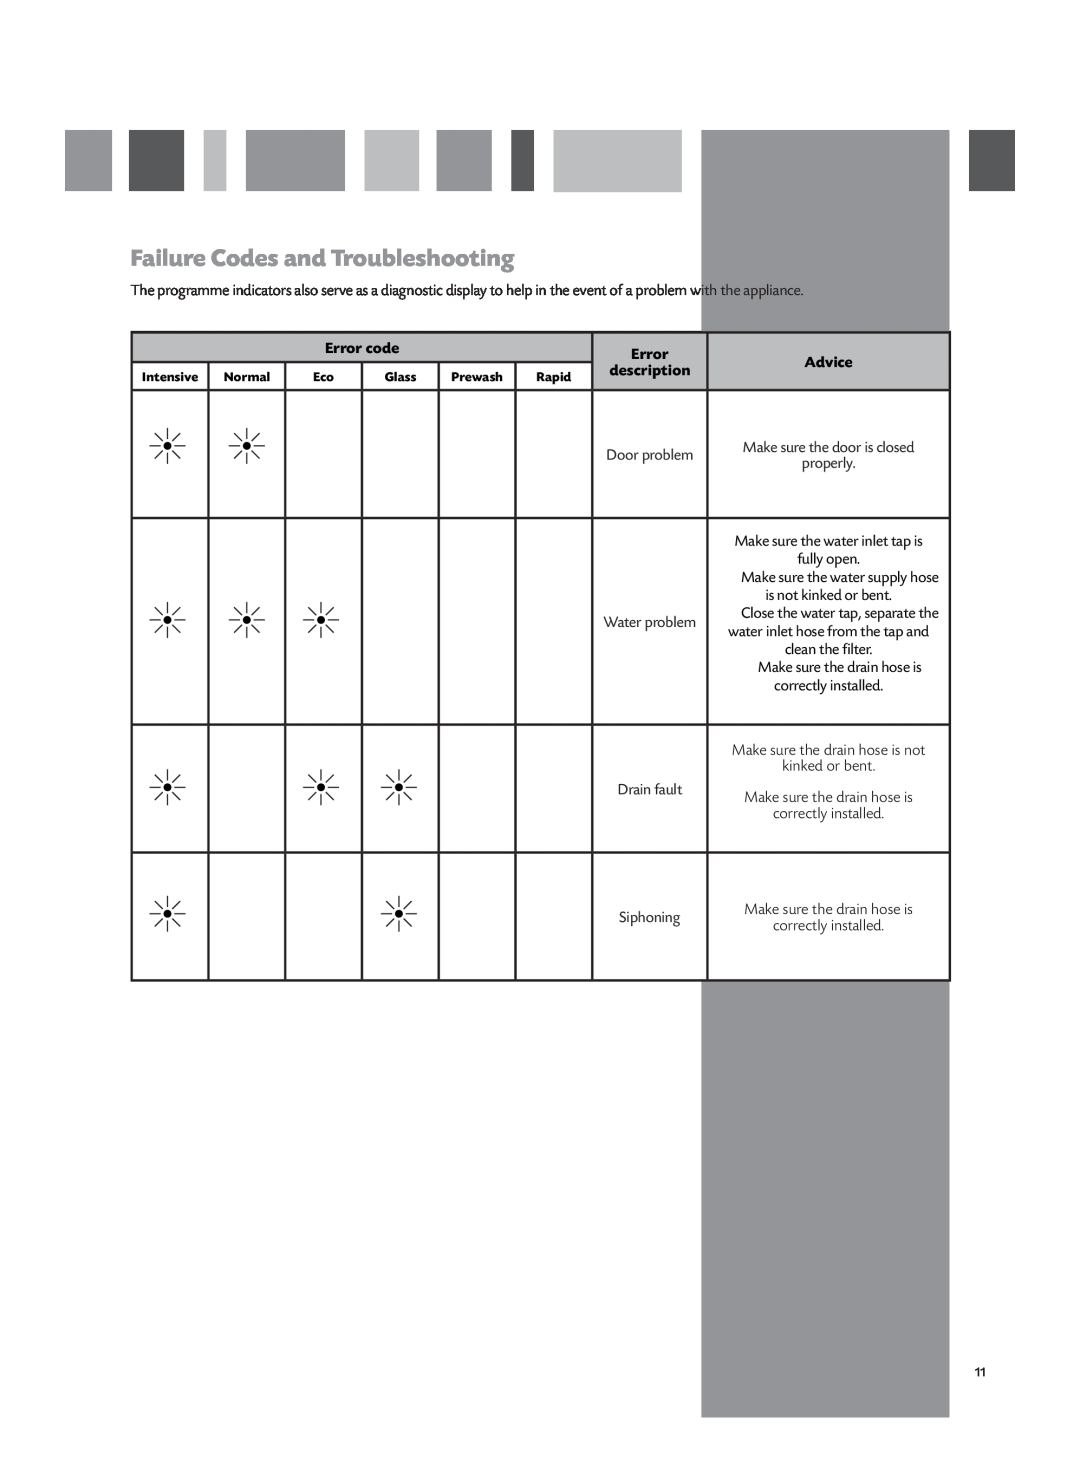 CDA WC430 manual Failure Codes and Troubleshooting, Error code, Advice, description 